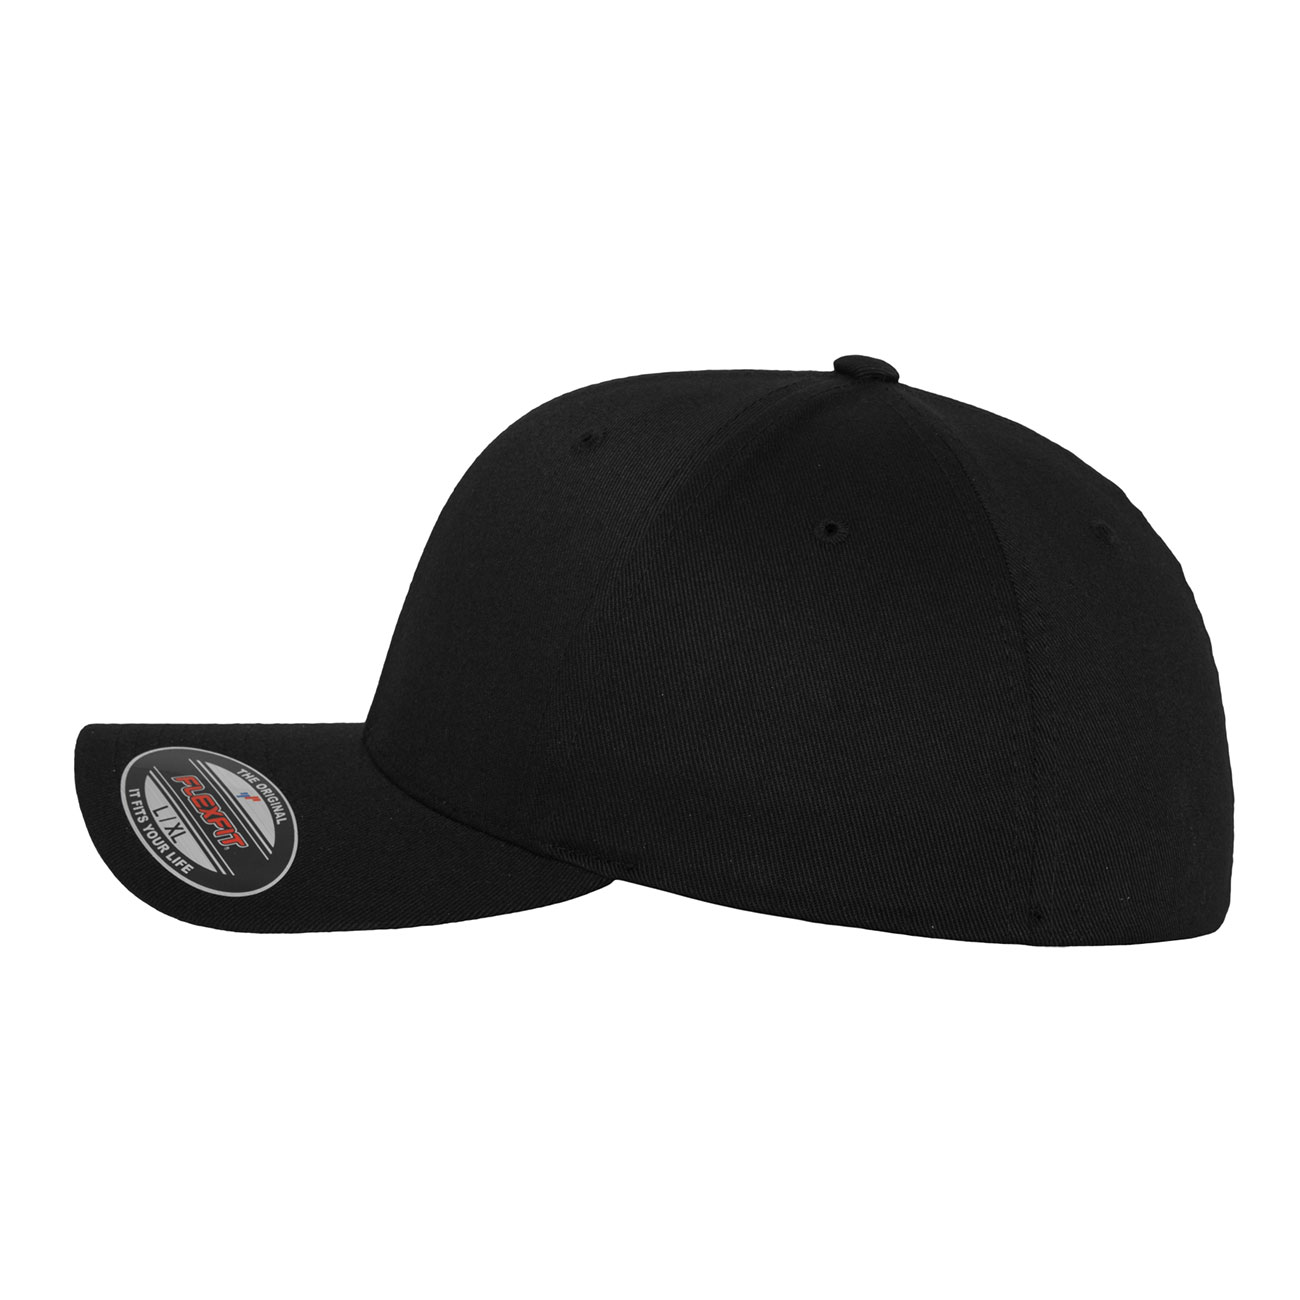 Flexfit Mütze Wooly Combed Cap schwarz-grau Bild 1